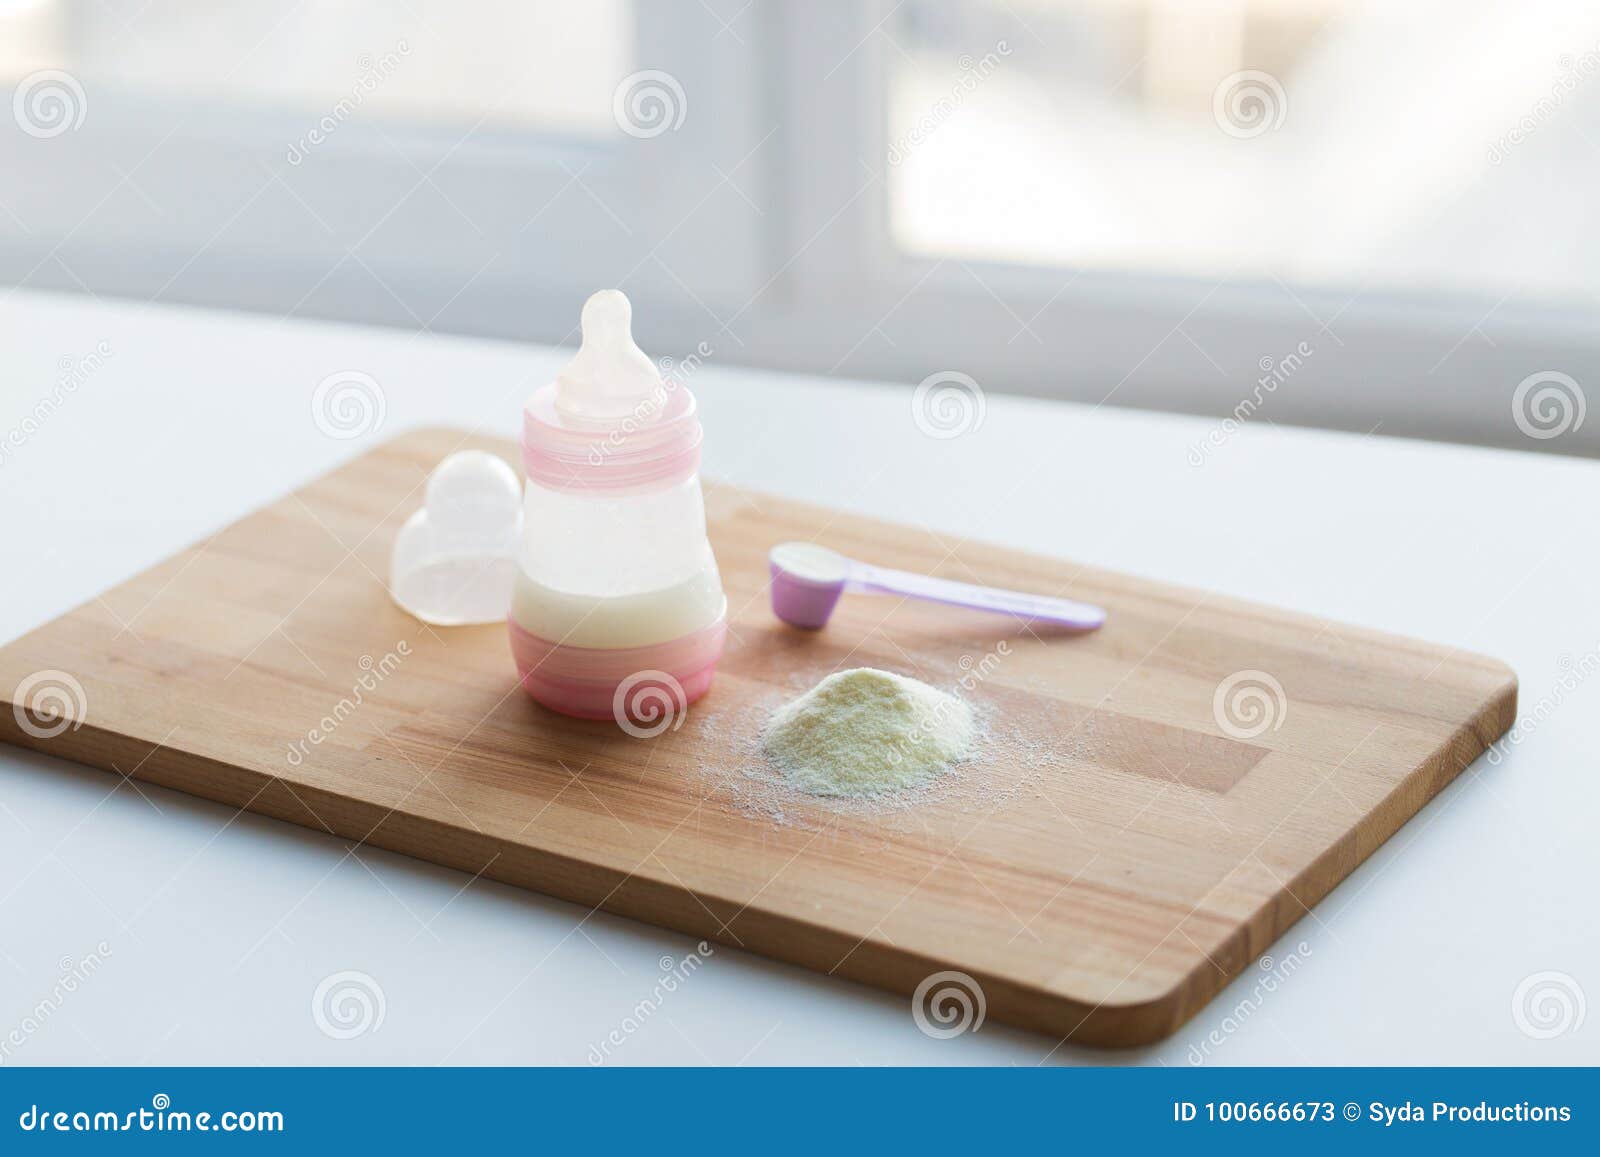 infant formula, baby bottle and scoop on board